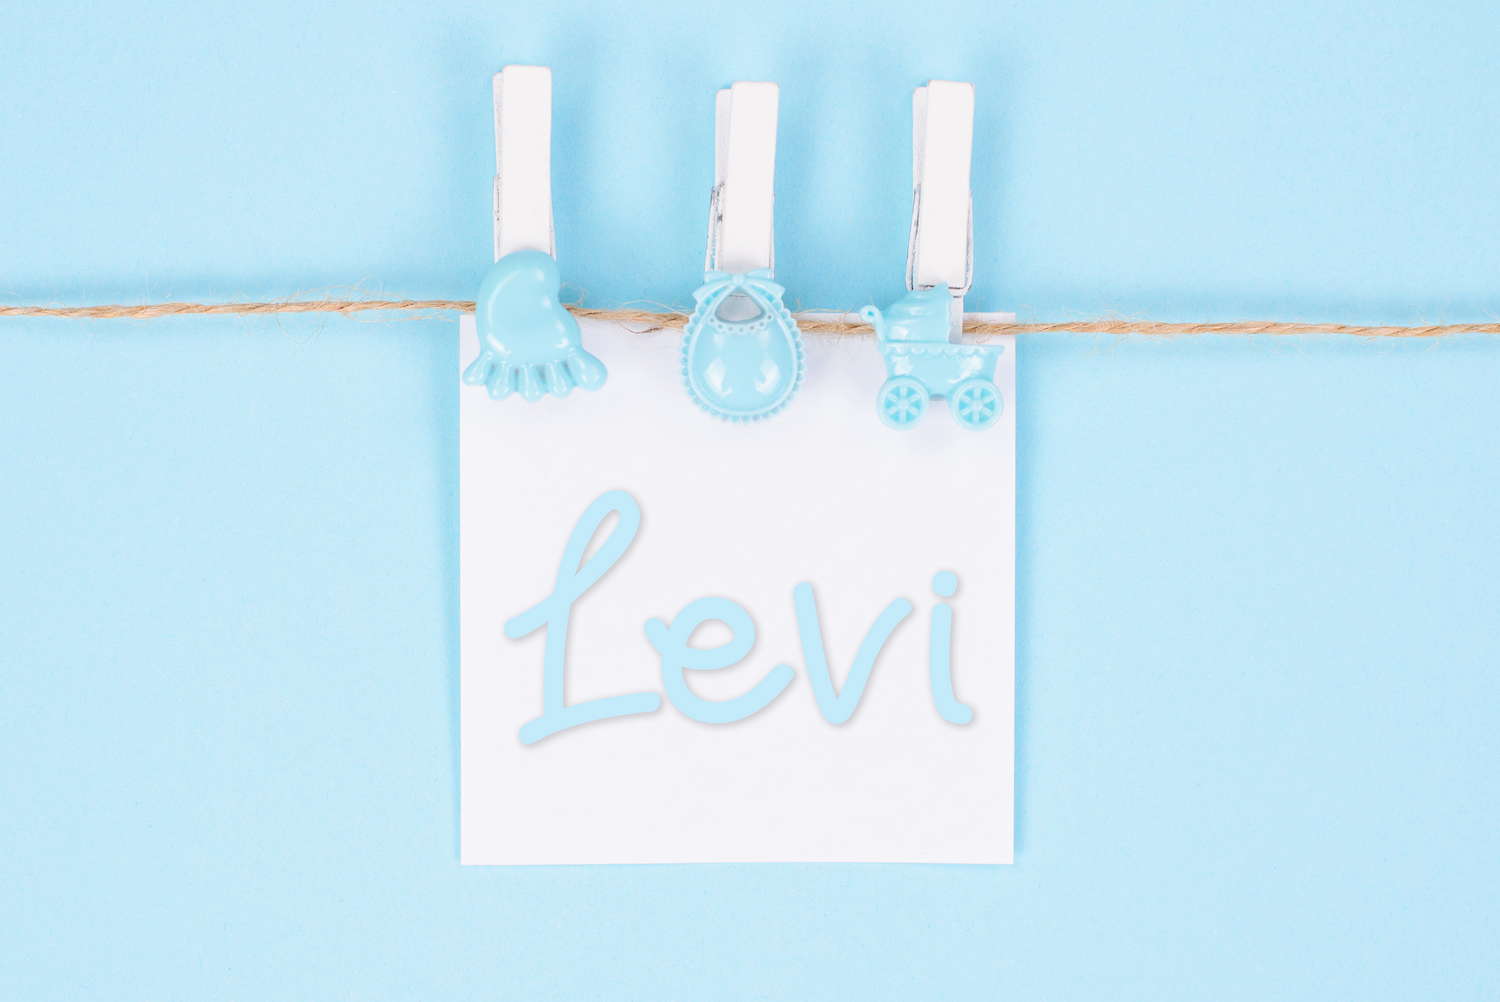 Levi Baby Name